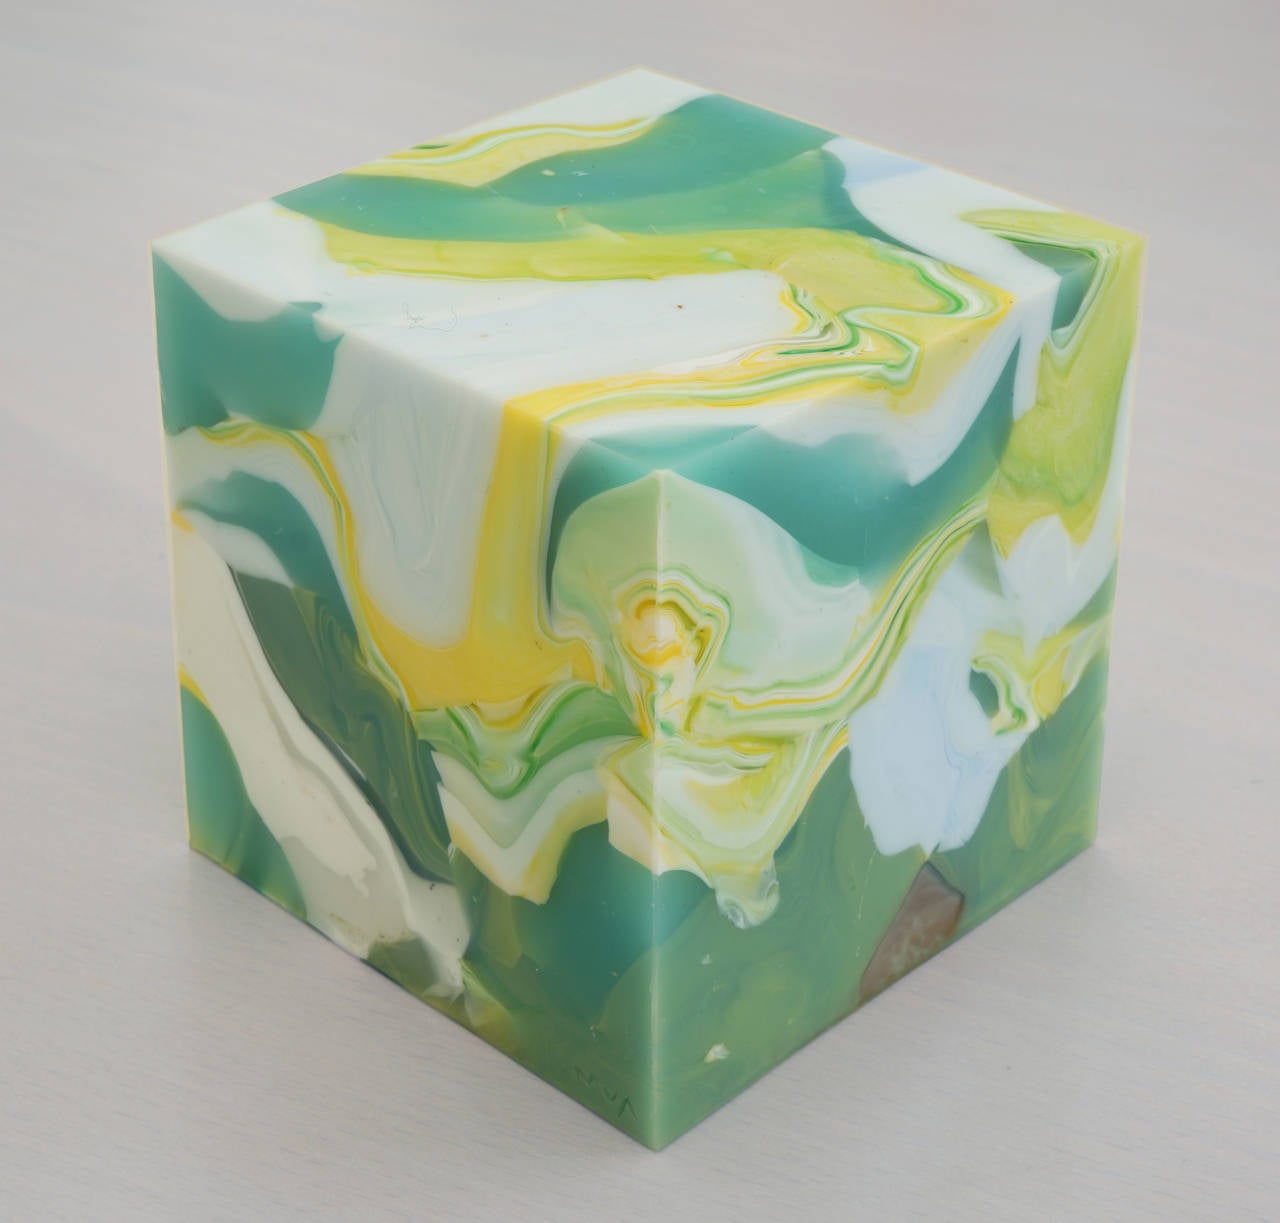 Mini-Cube, 13-20-3 - Art by Matthias van Arkel